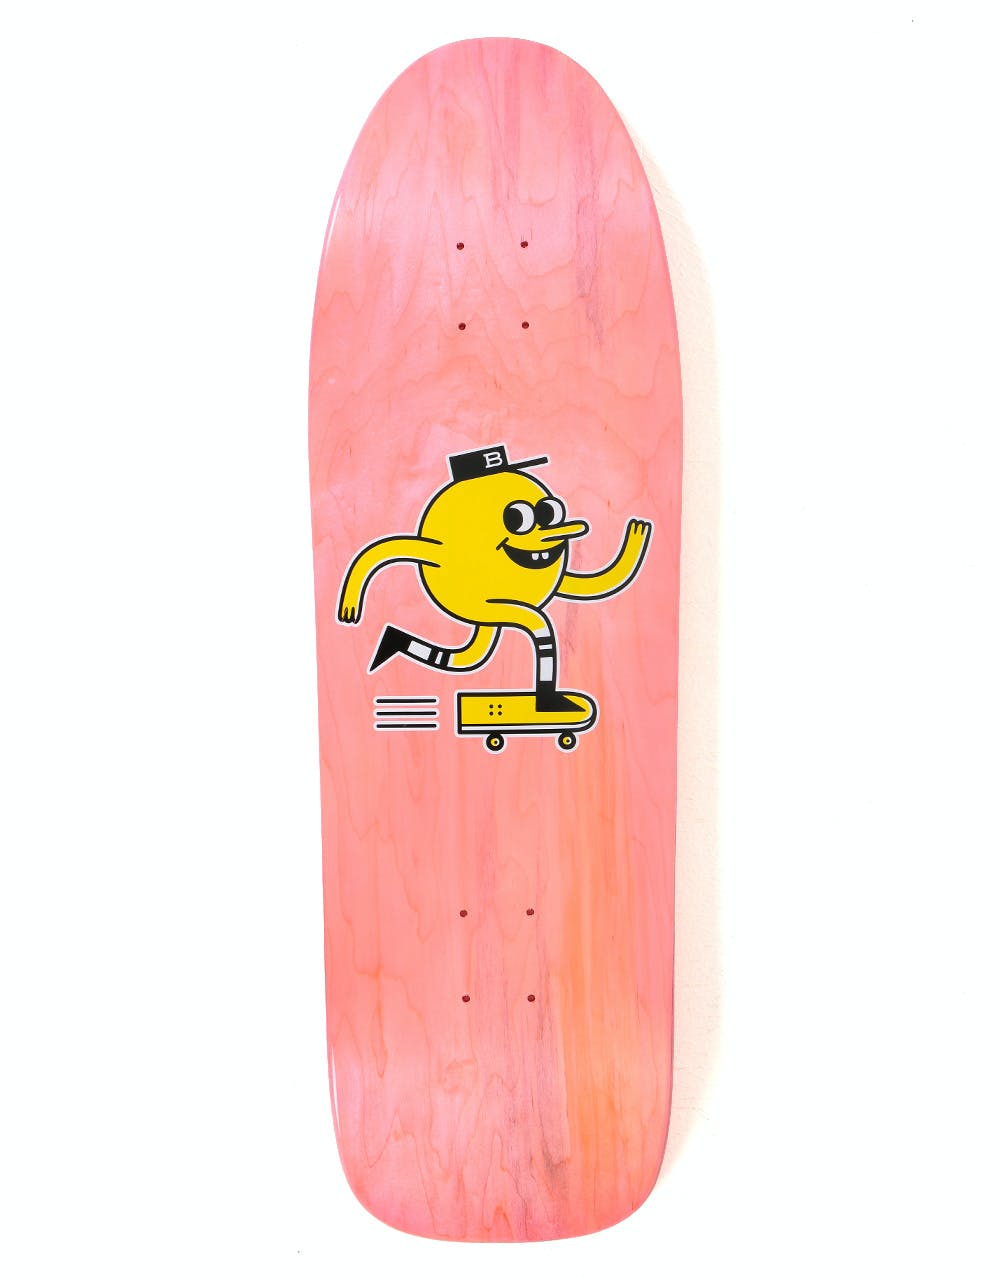 Blast 'Scented' Logo Skateboard Deck - 9.75"